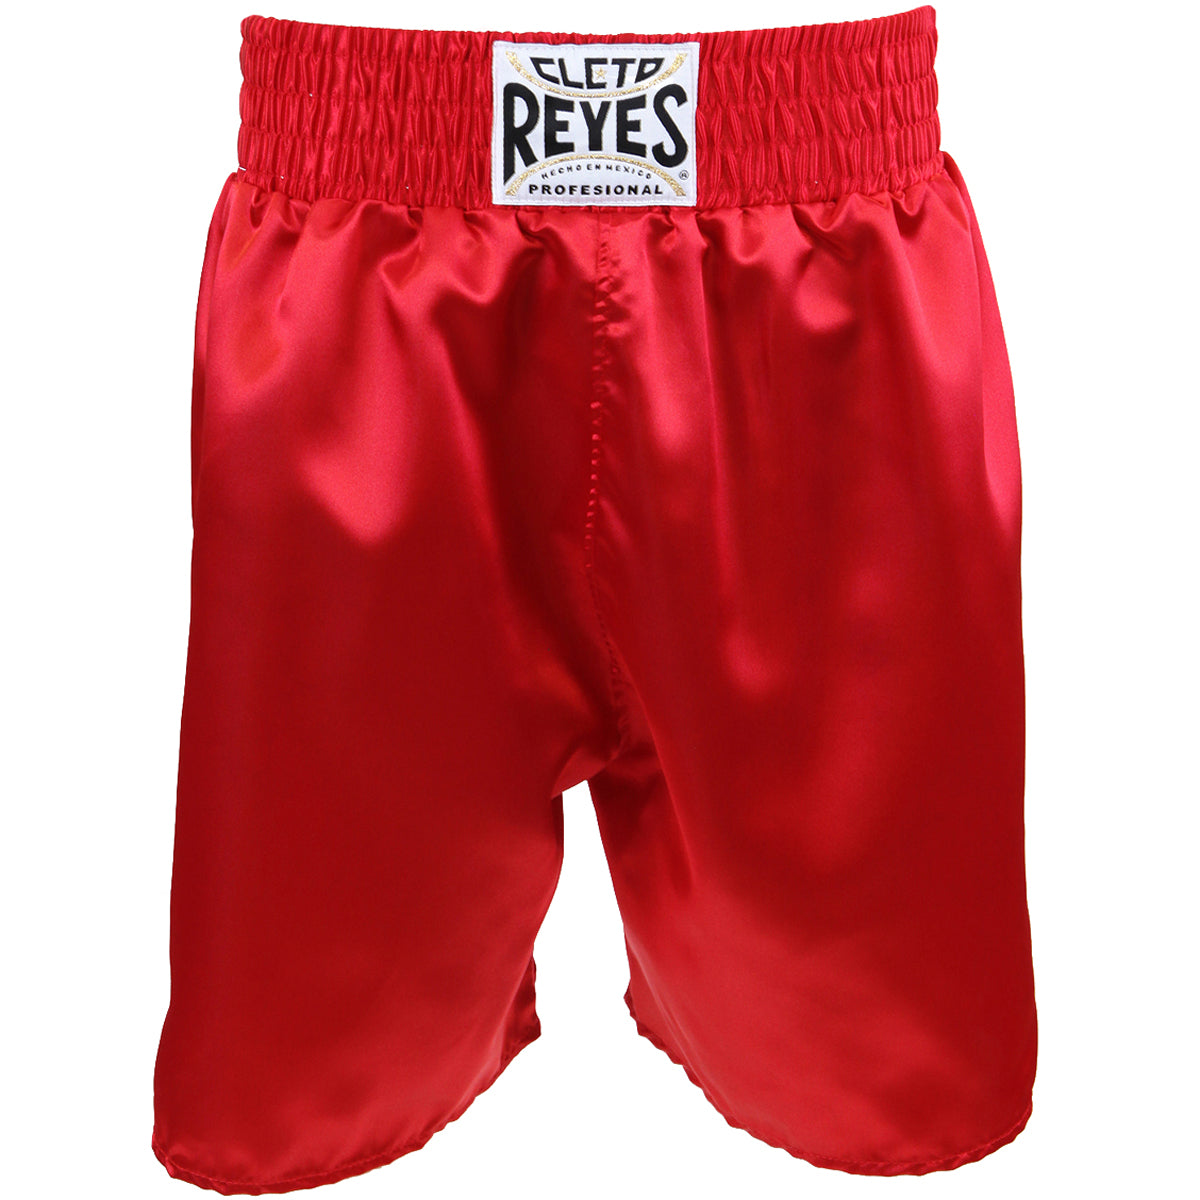 Cleto Reyes Satin Classic Boxing Trunks - Large (40") - Red Cleto Reyes